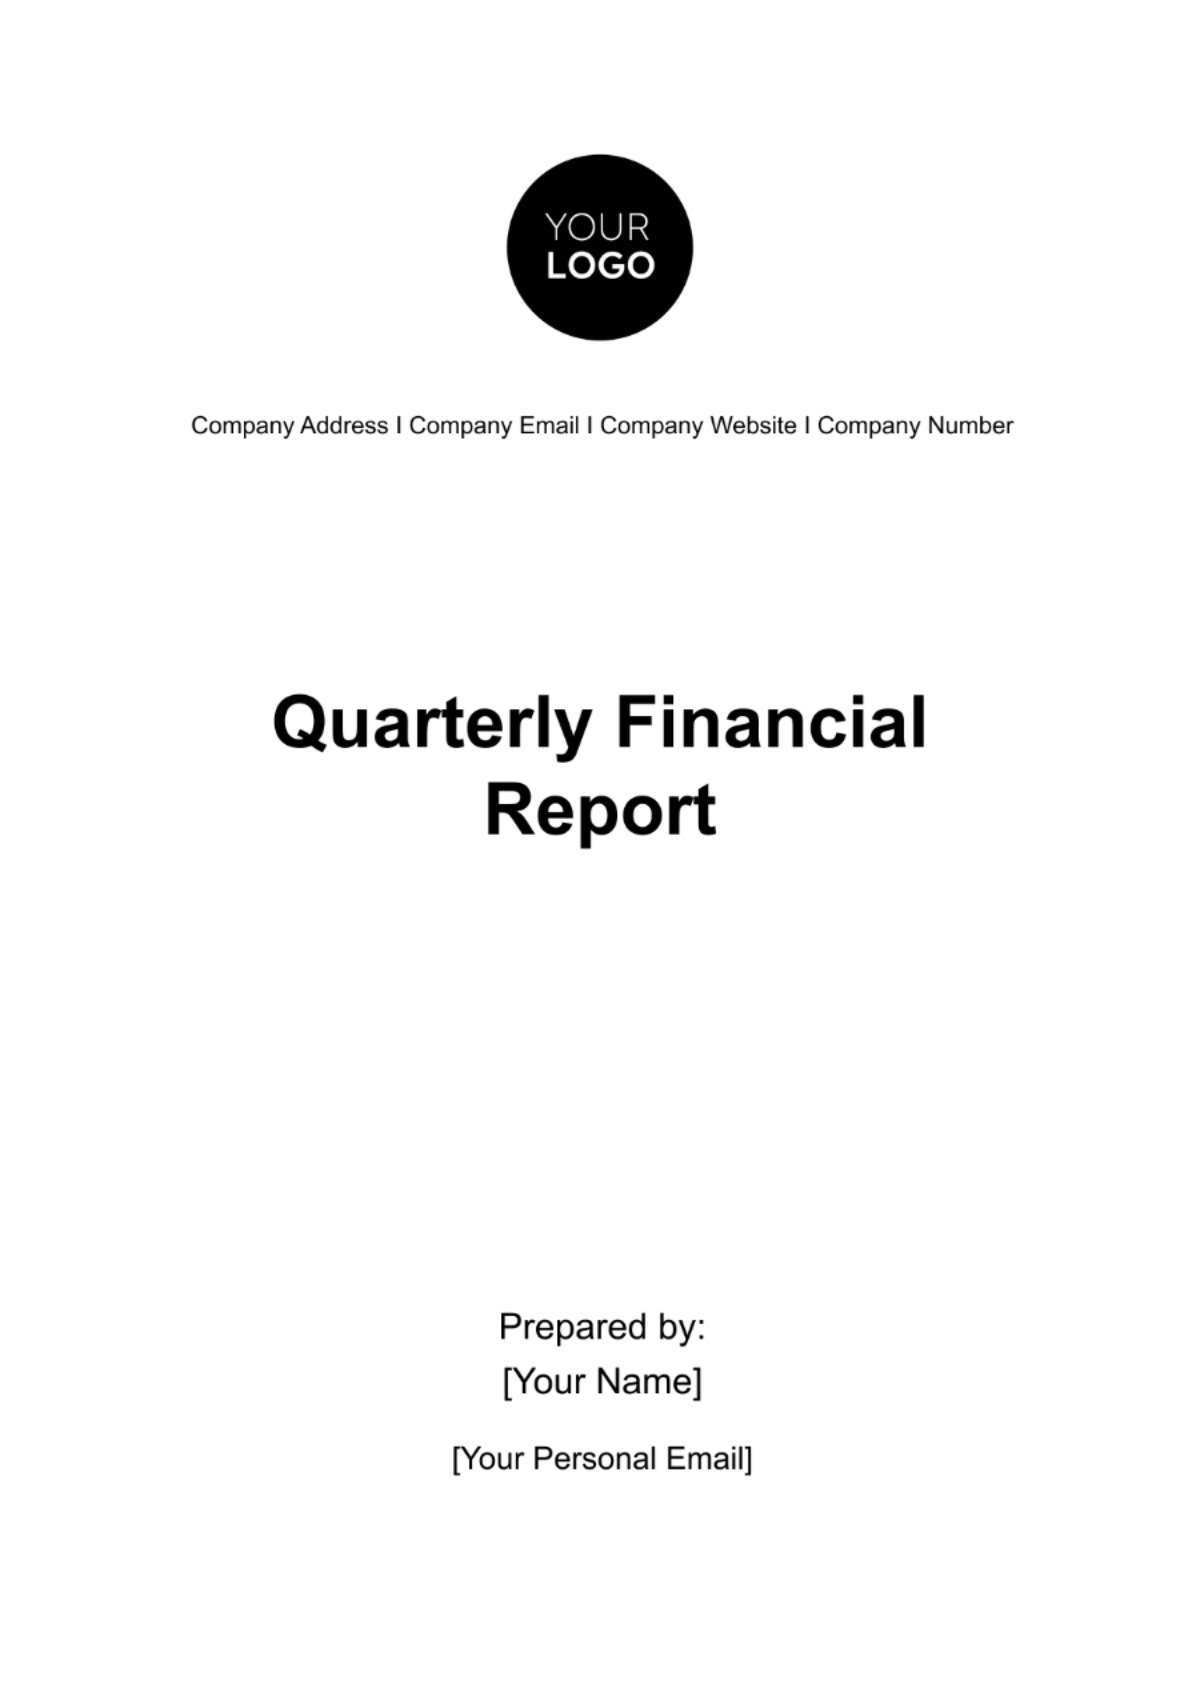 Quarterly Financial Report Template